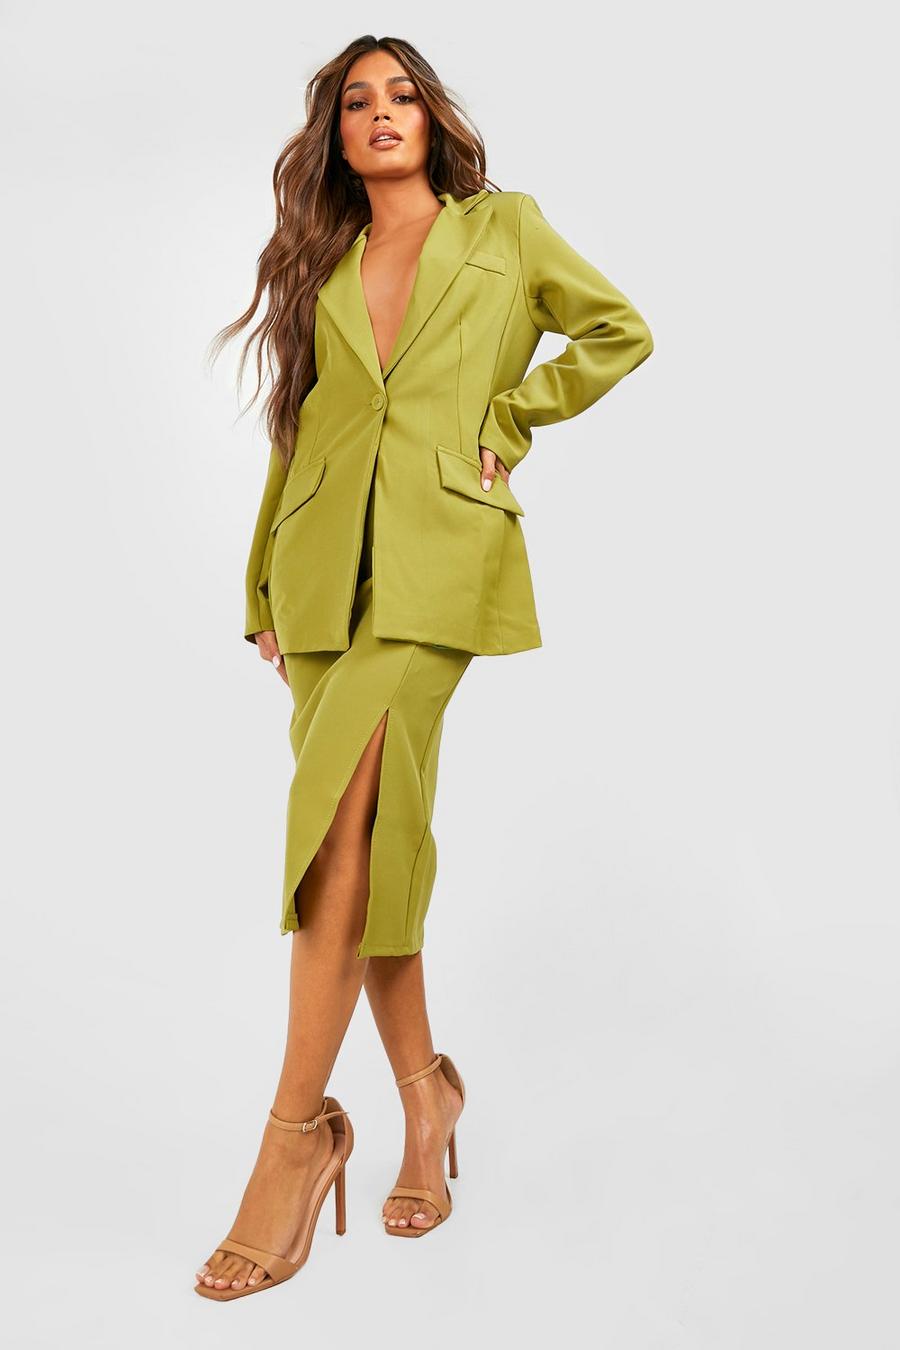 Olive green Kostymkjol med slits